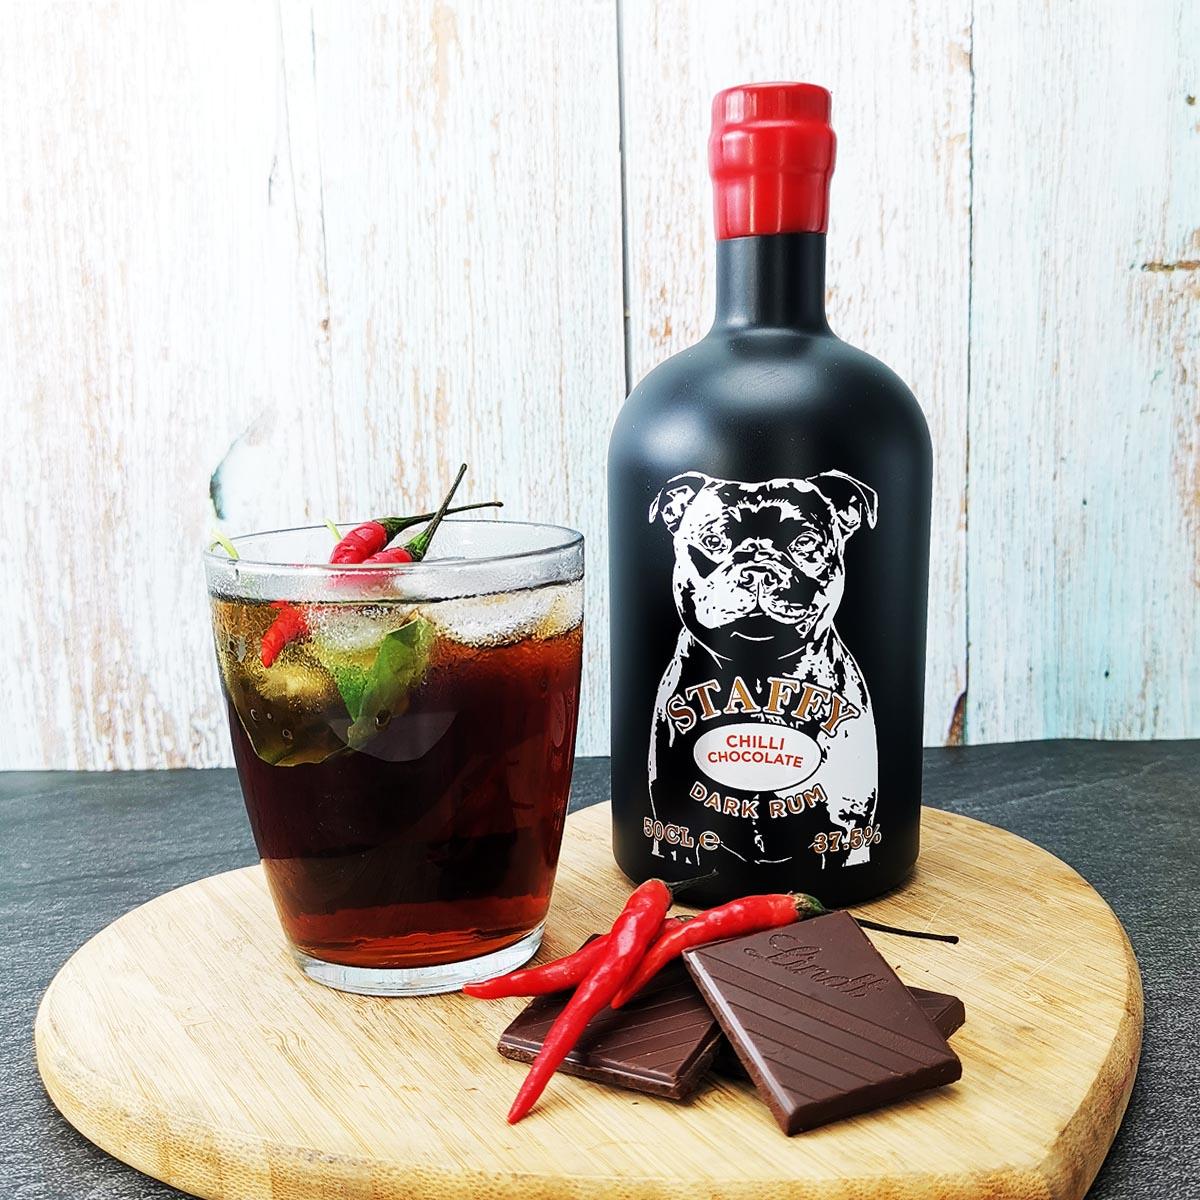 Staffy Chilli Chocolate Caribbean Dark Rum 50cl